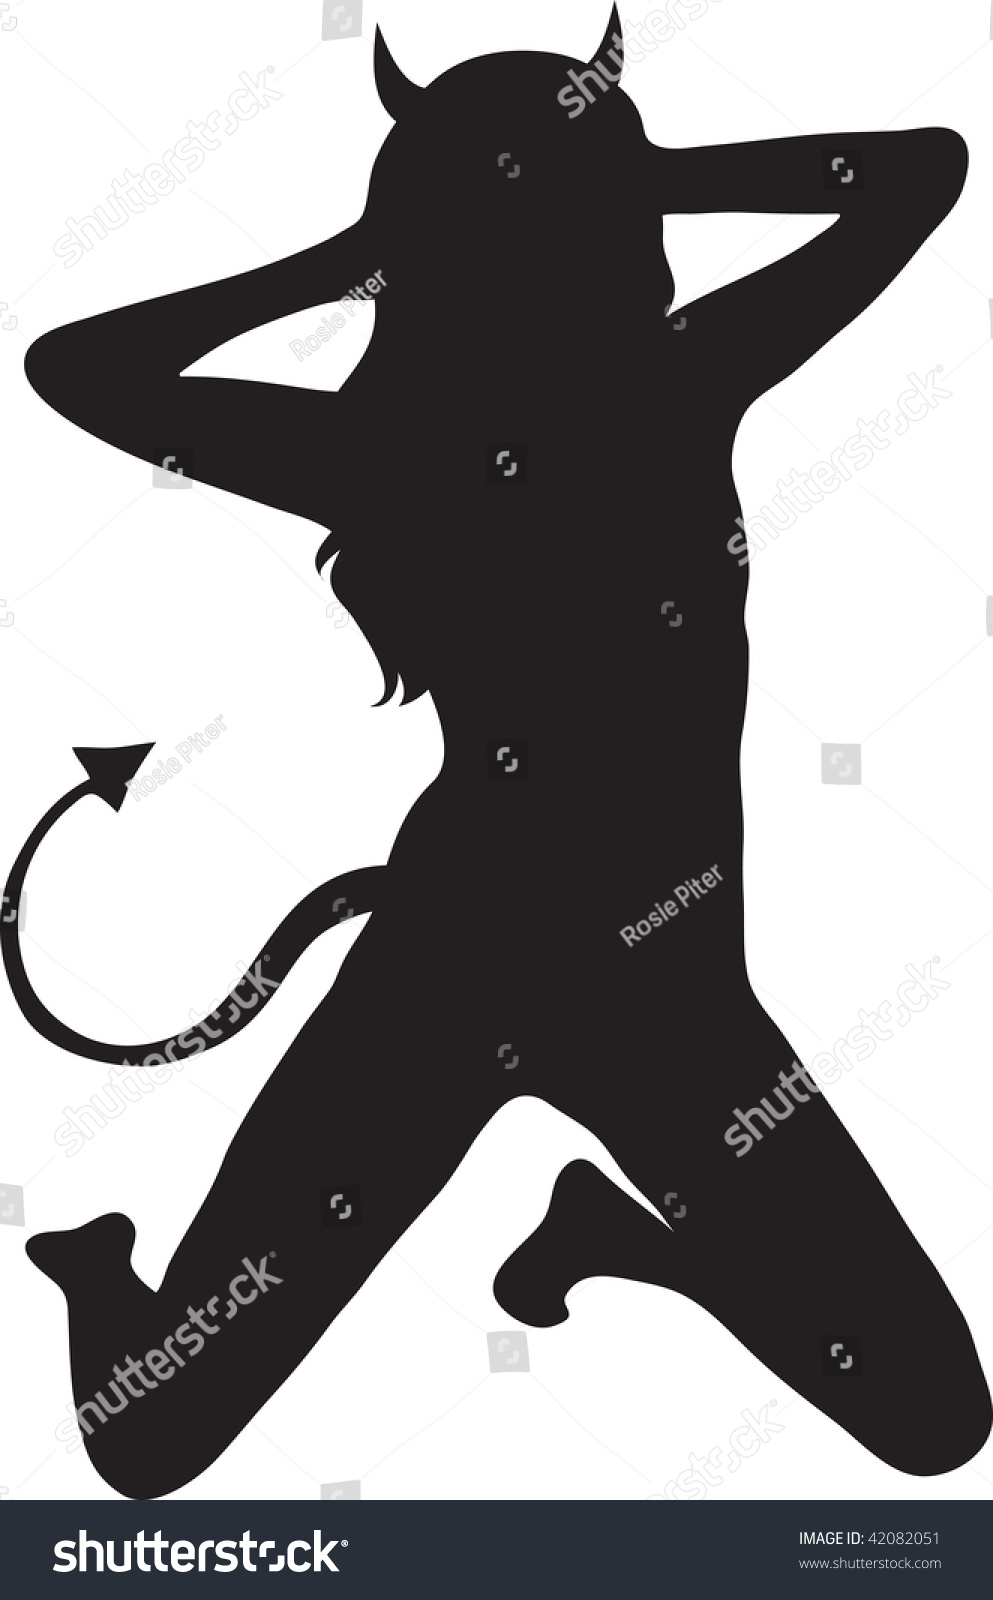 Clip Art Illustration Silhouette Sexy Woman Stock